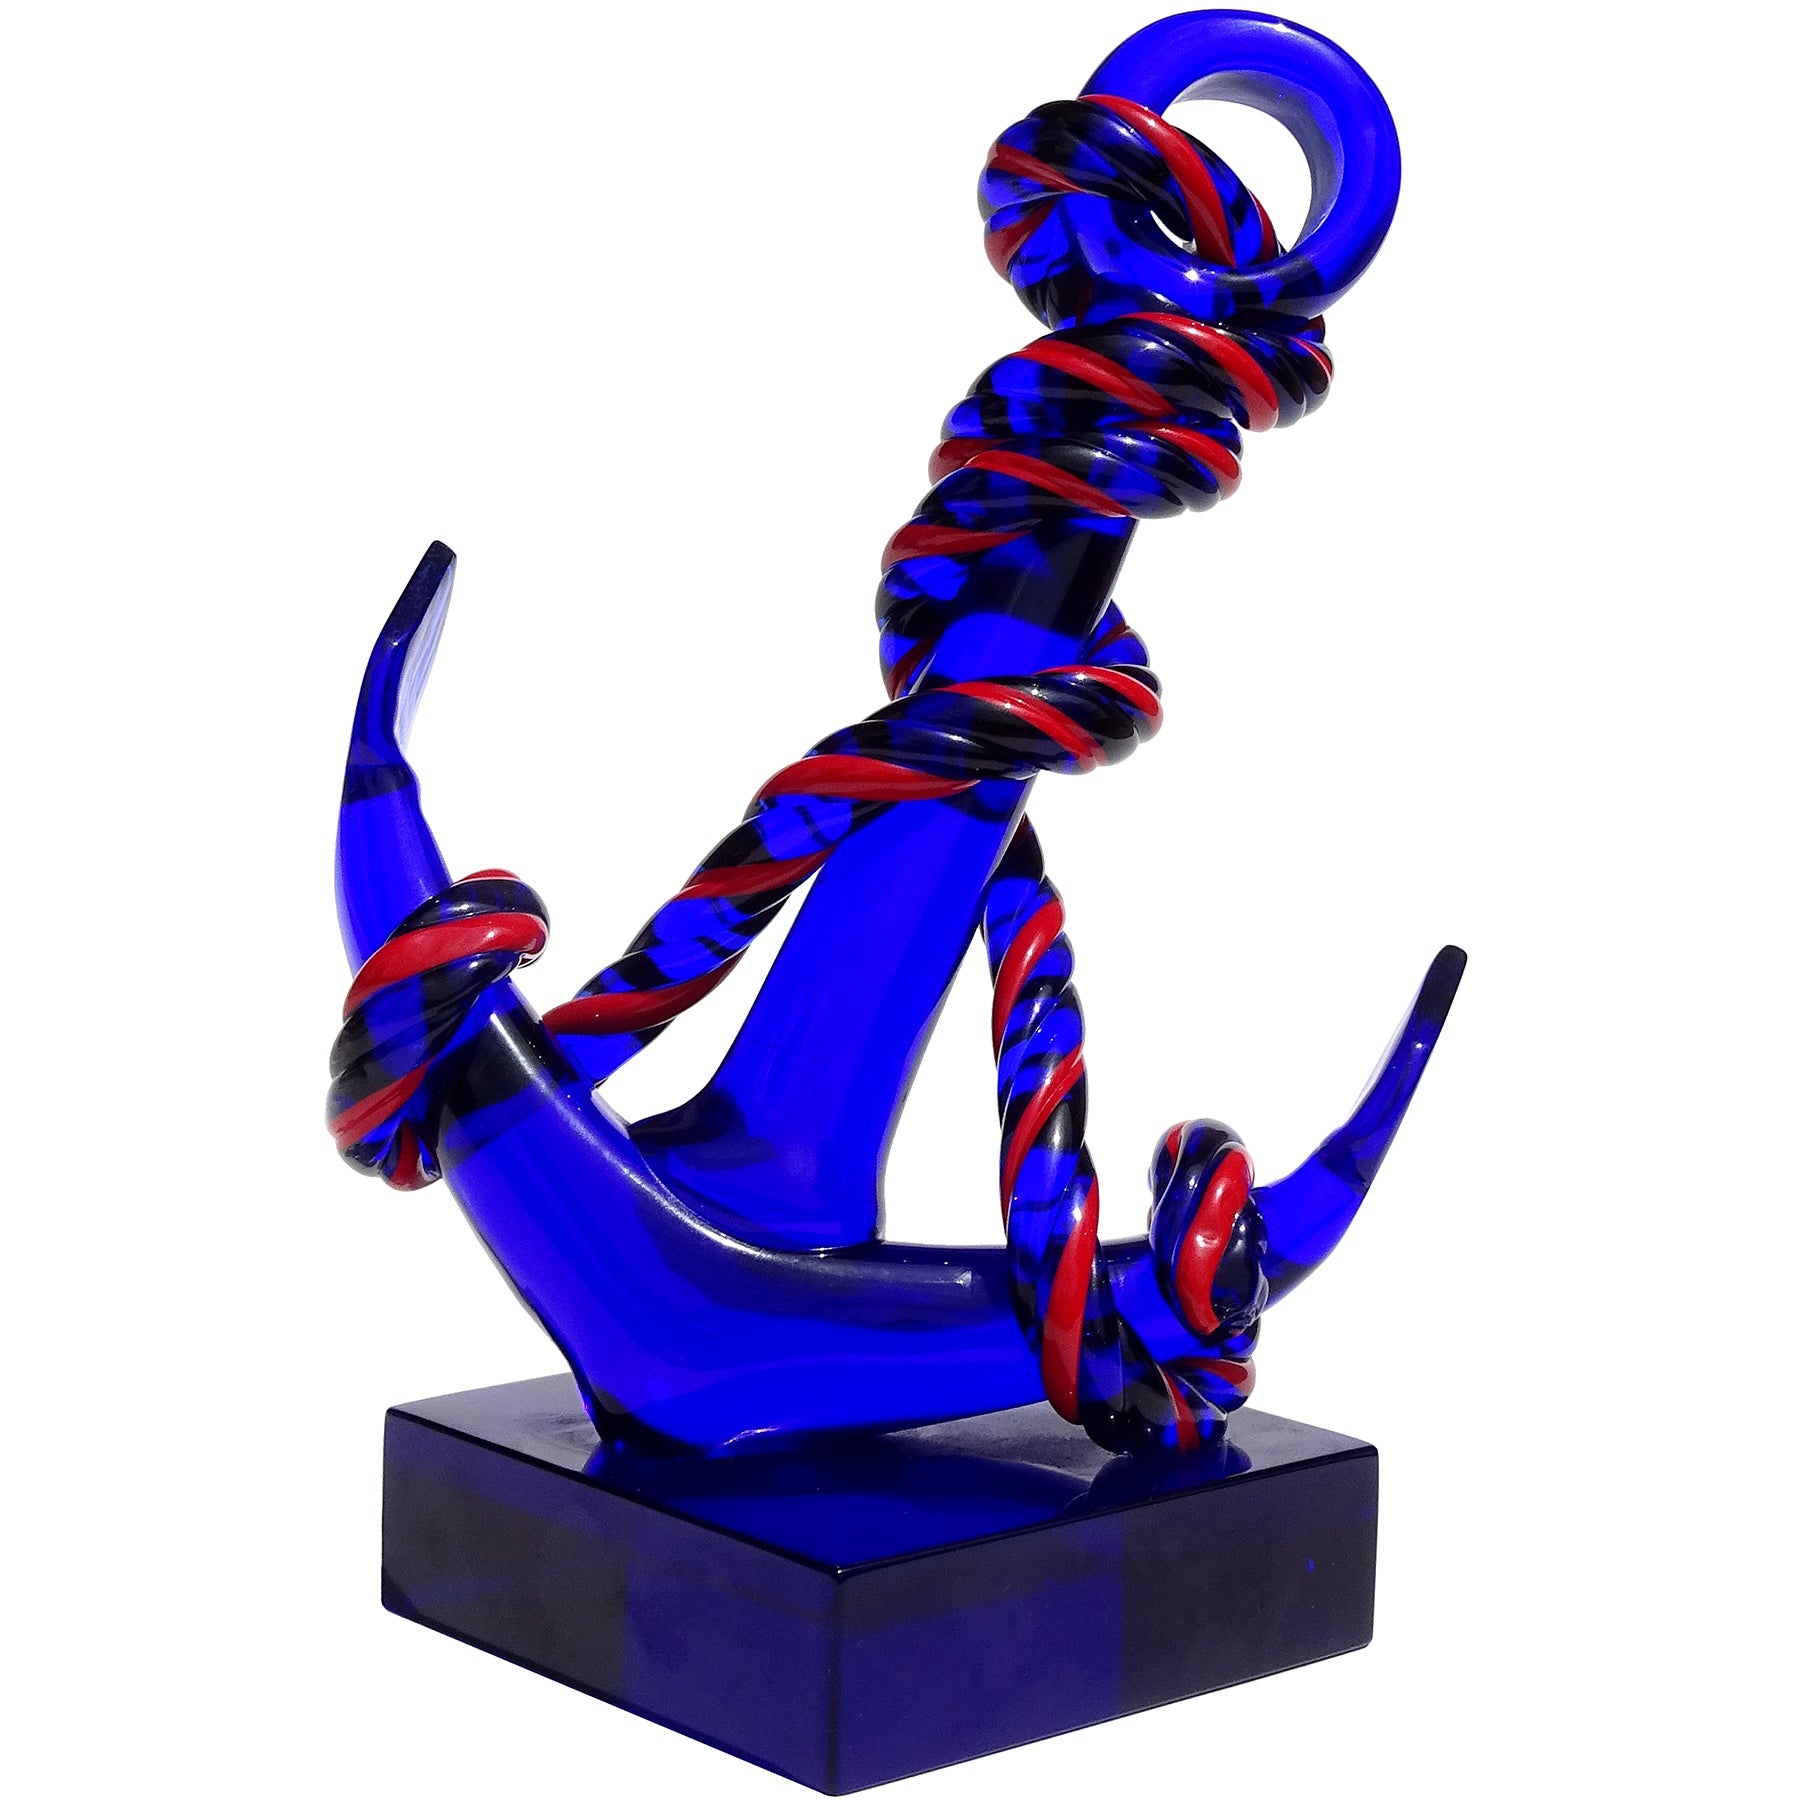 Seguso Murano - Art italien - Sculpture nautique d'ancre de bateau en verre bleu rouge